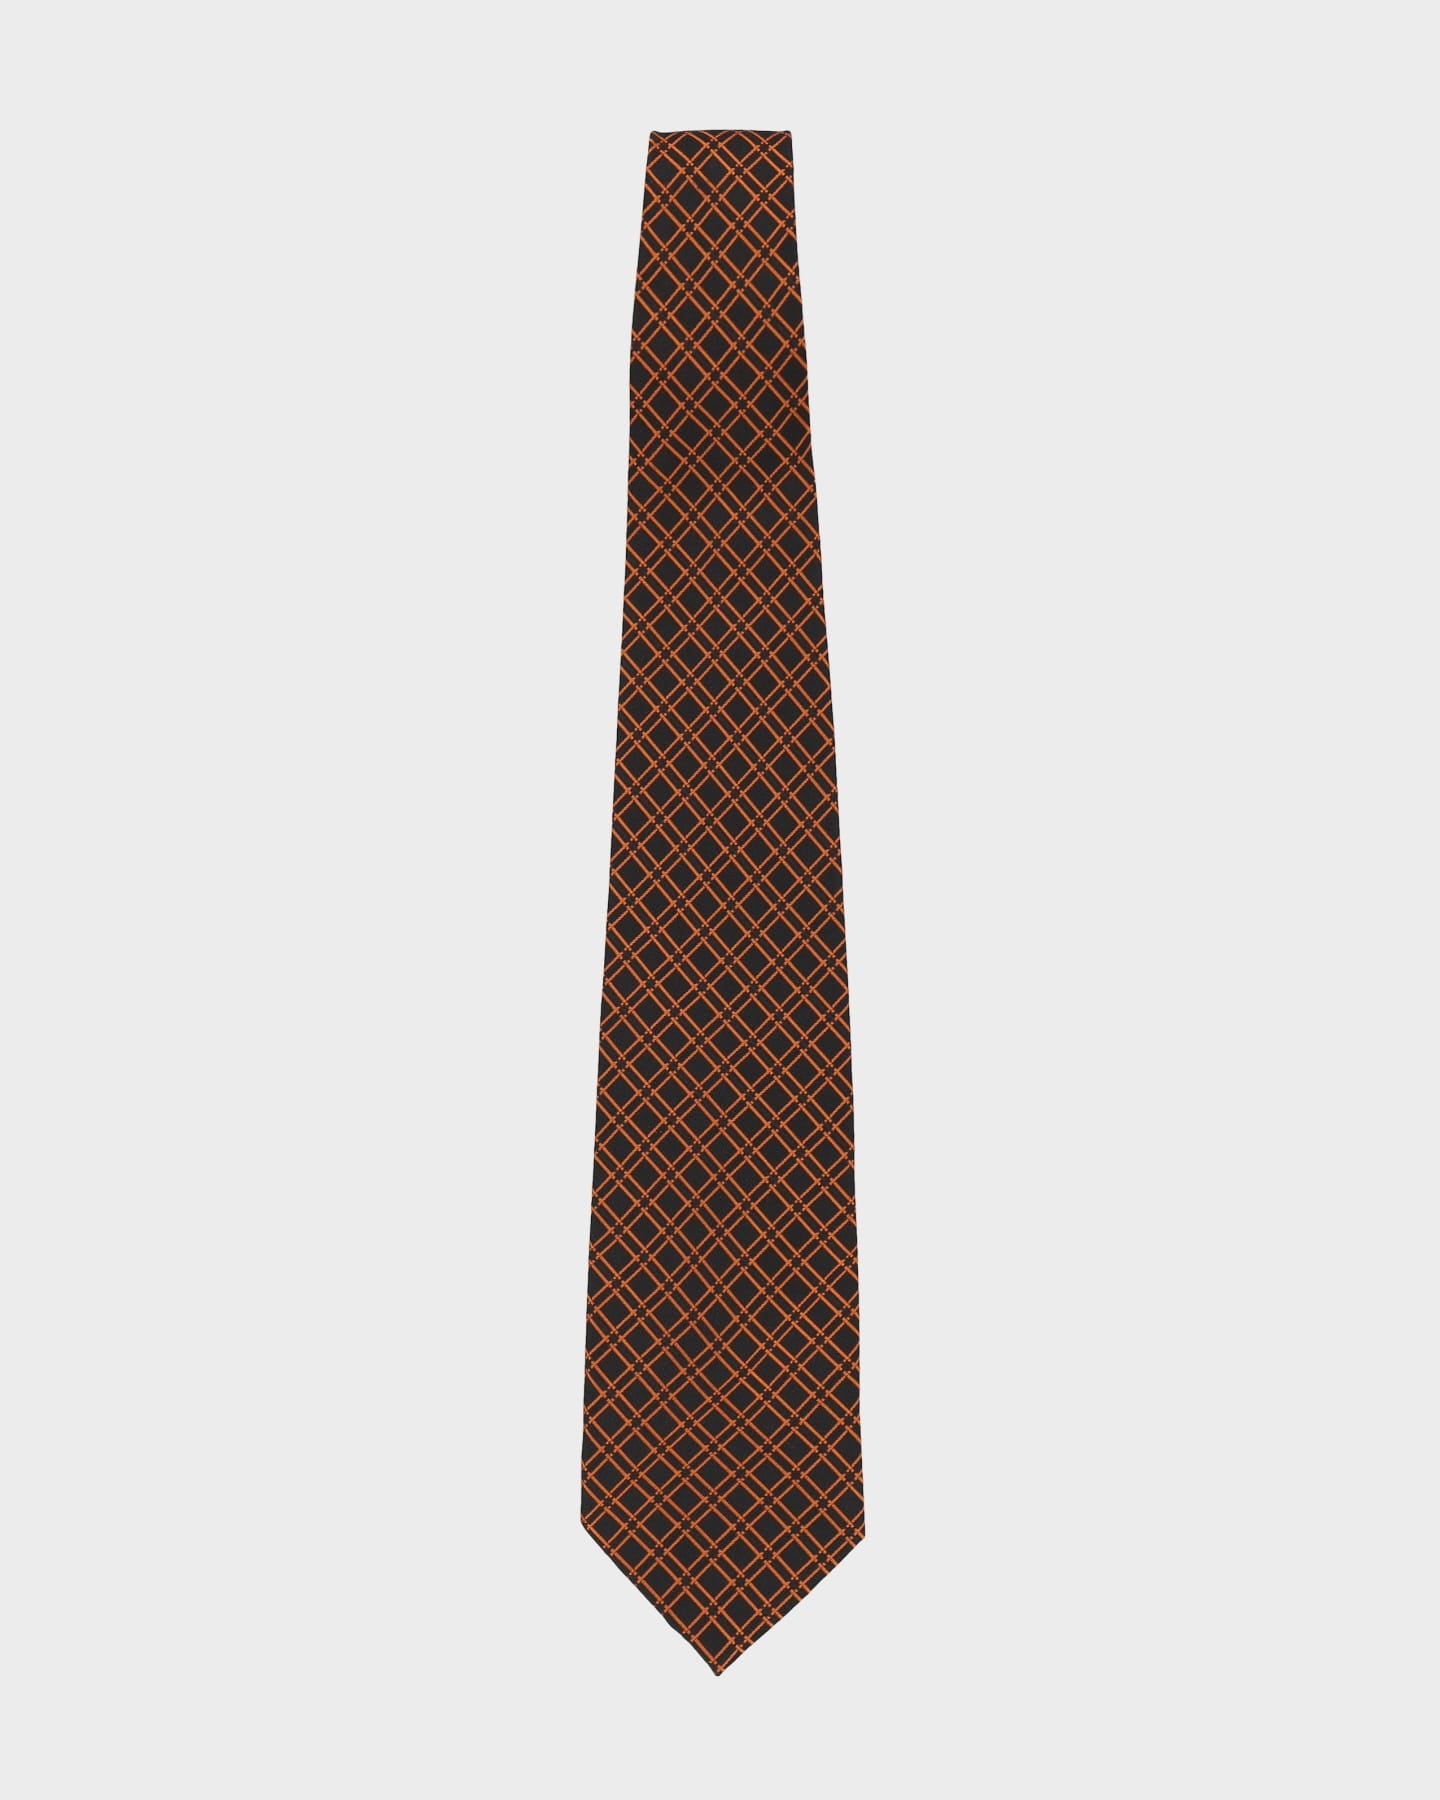 Burberry Black / Orange Patterned Silk Tie